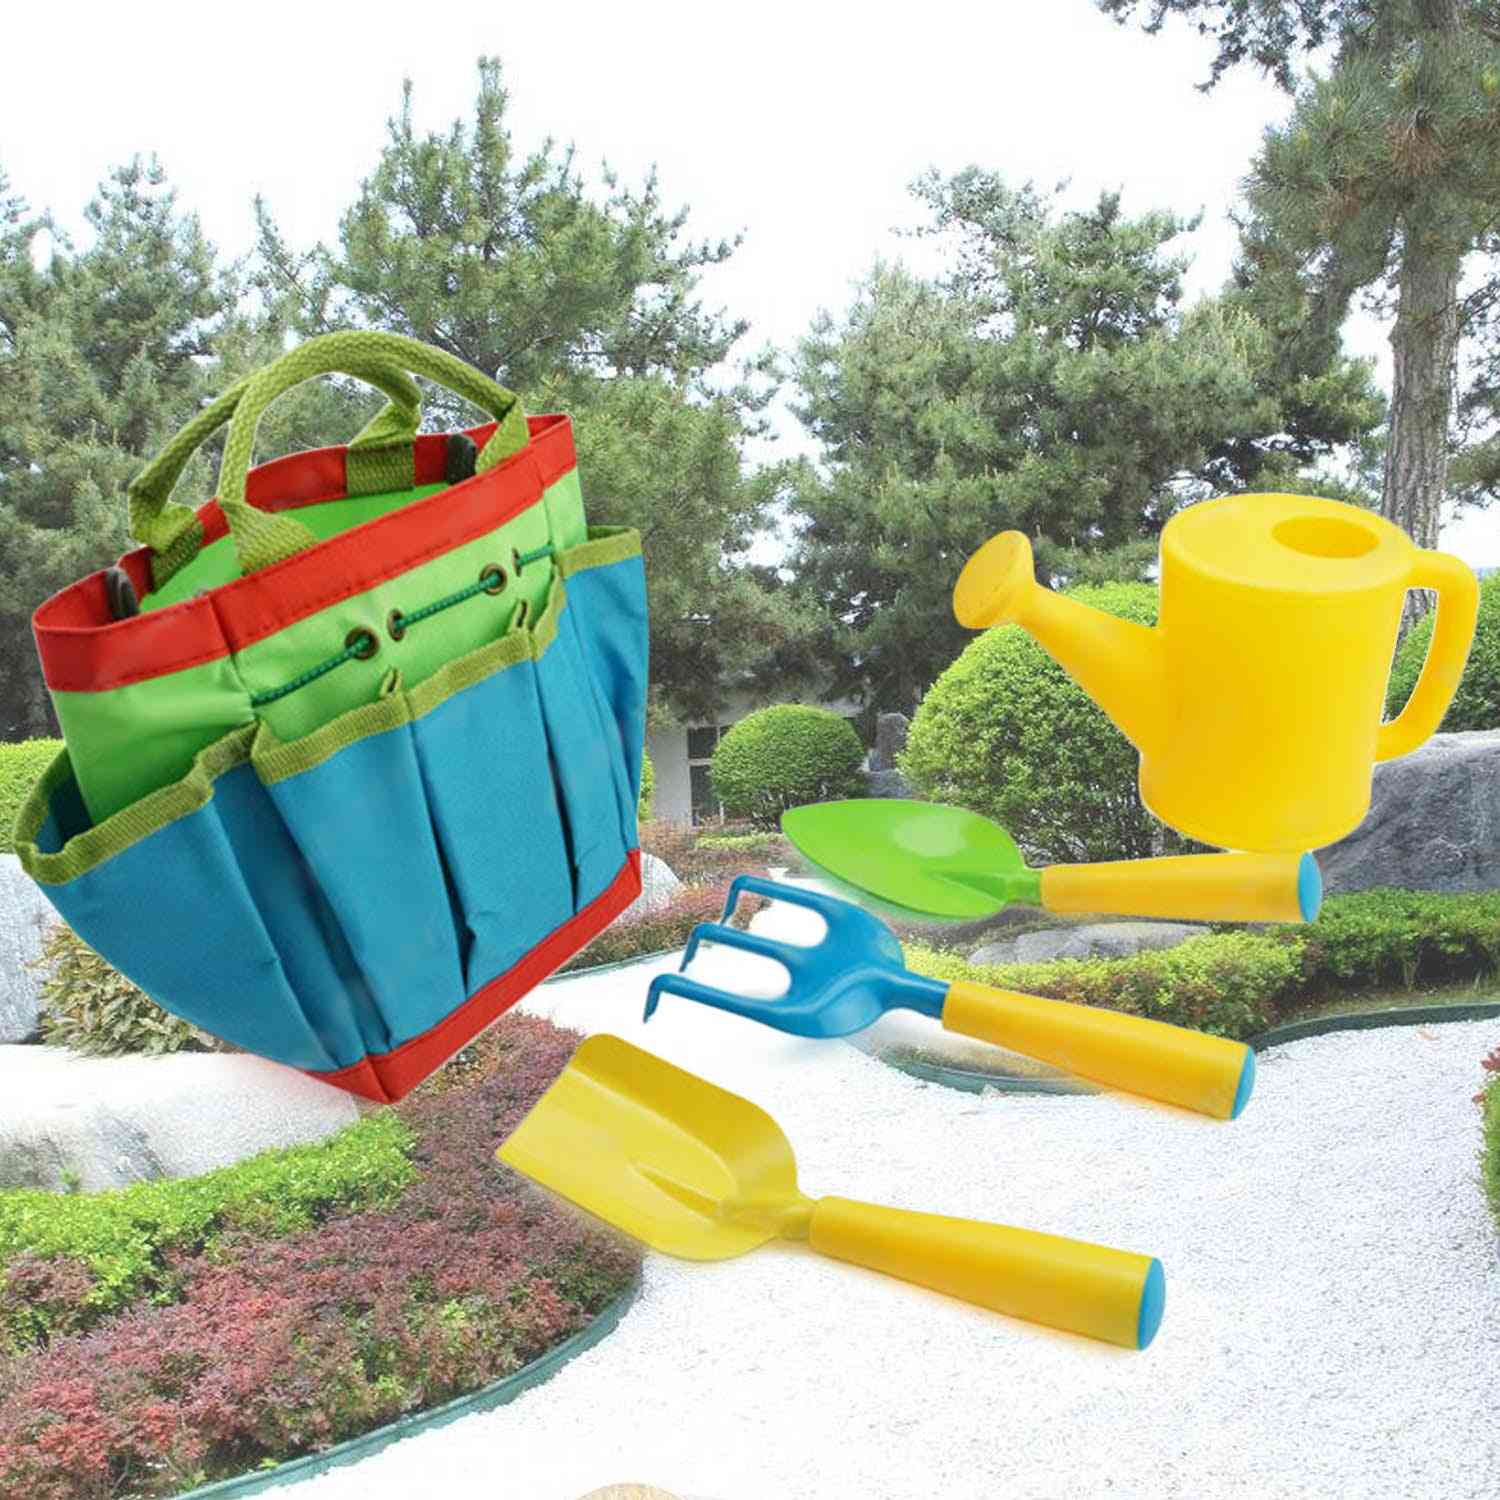 Children Gardening Tools Set - Watering Shovel Rake, Trowel Garden Tote Bag